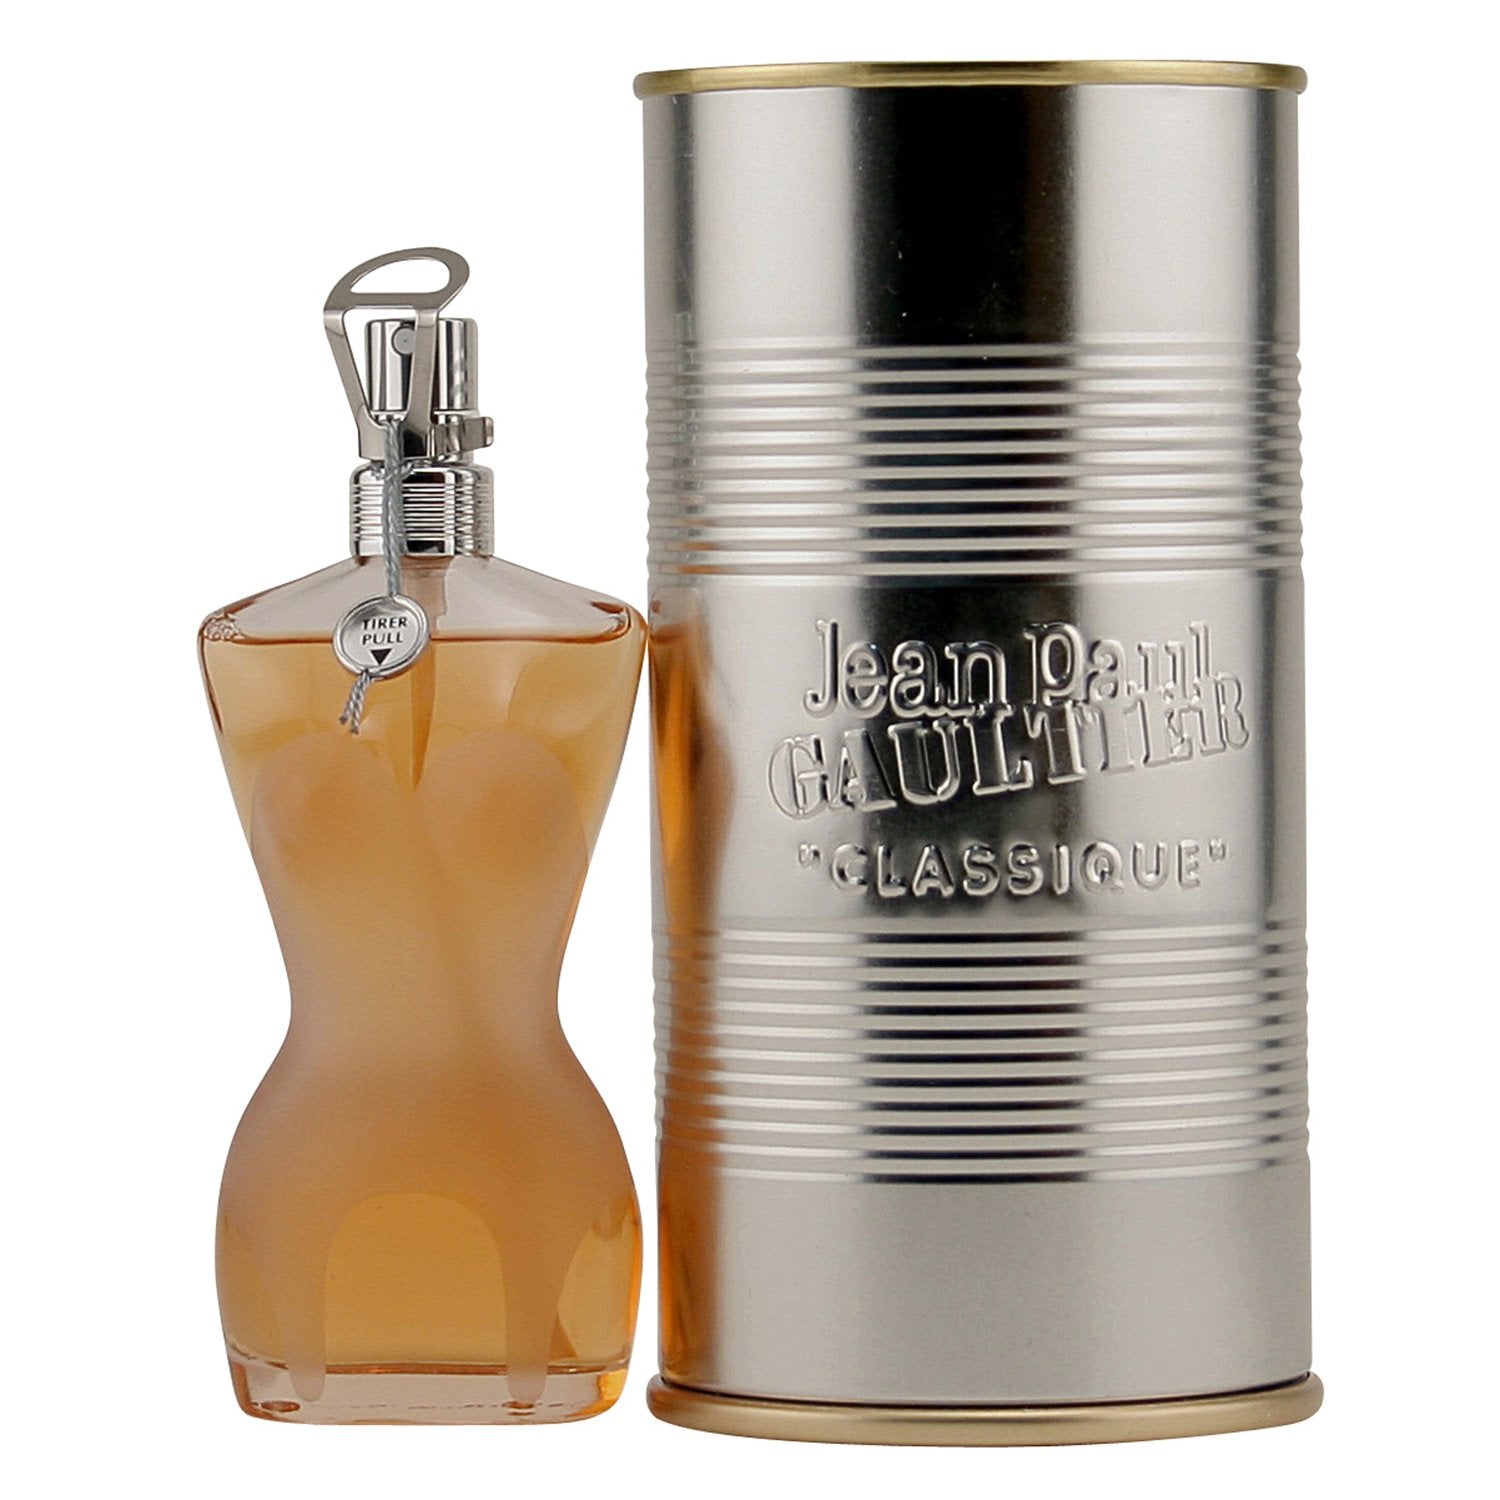 Perfume - JEAN PAUL GAULTIER CLASSIQUE FOR WOMEN - EAU DE TOILETTE SPRAY